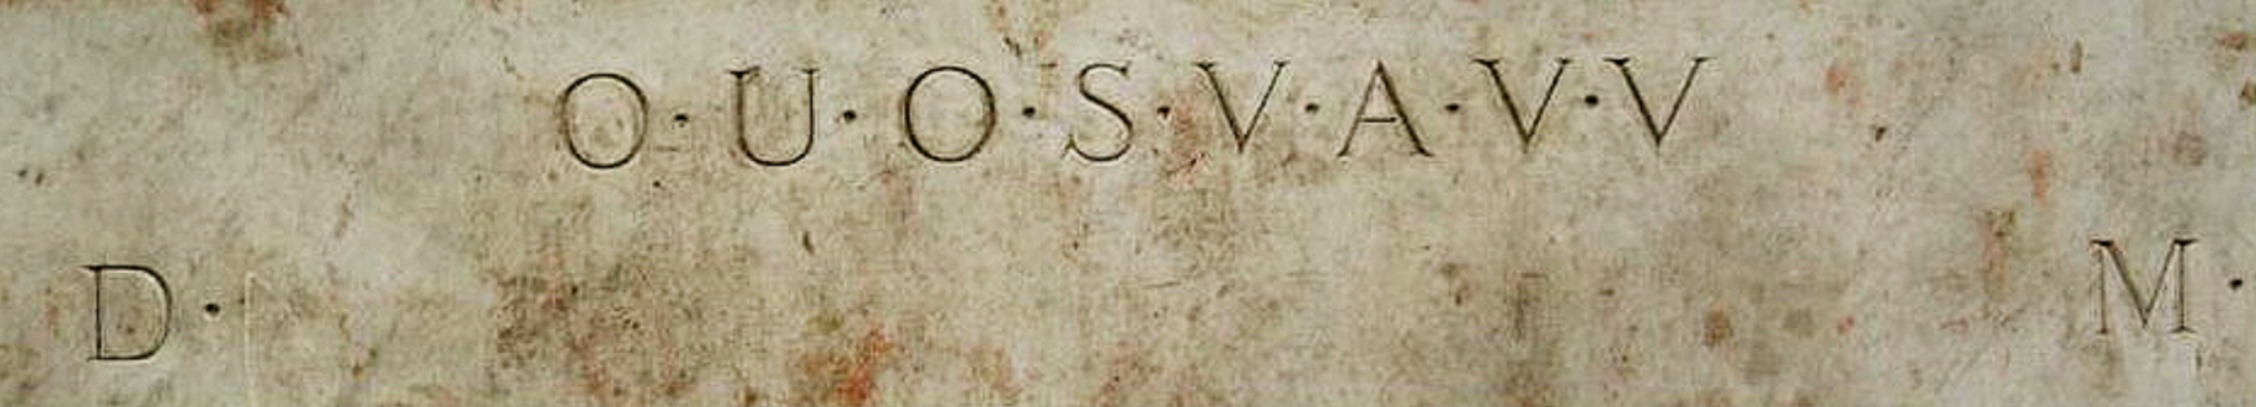 Shugborough inscription